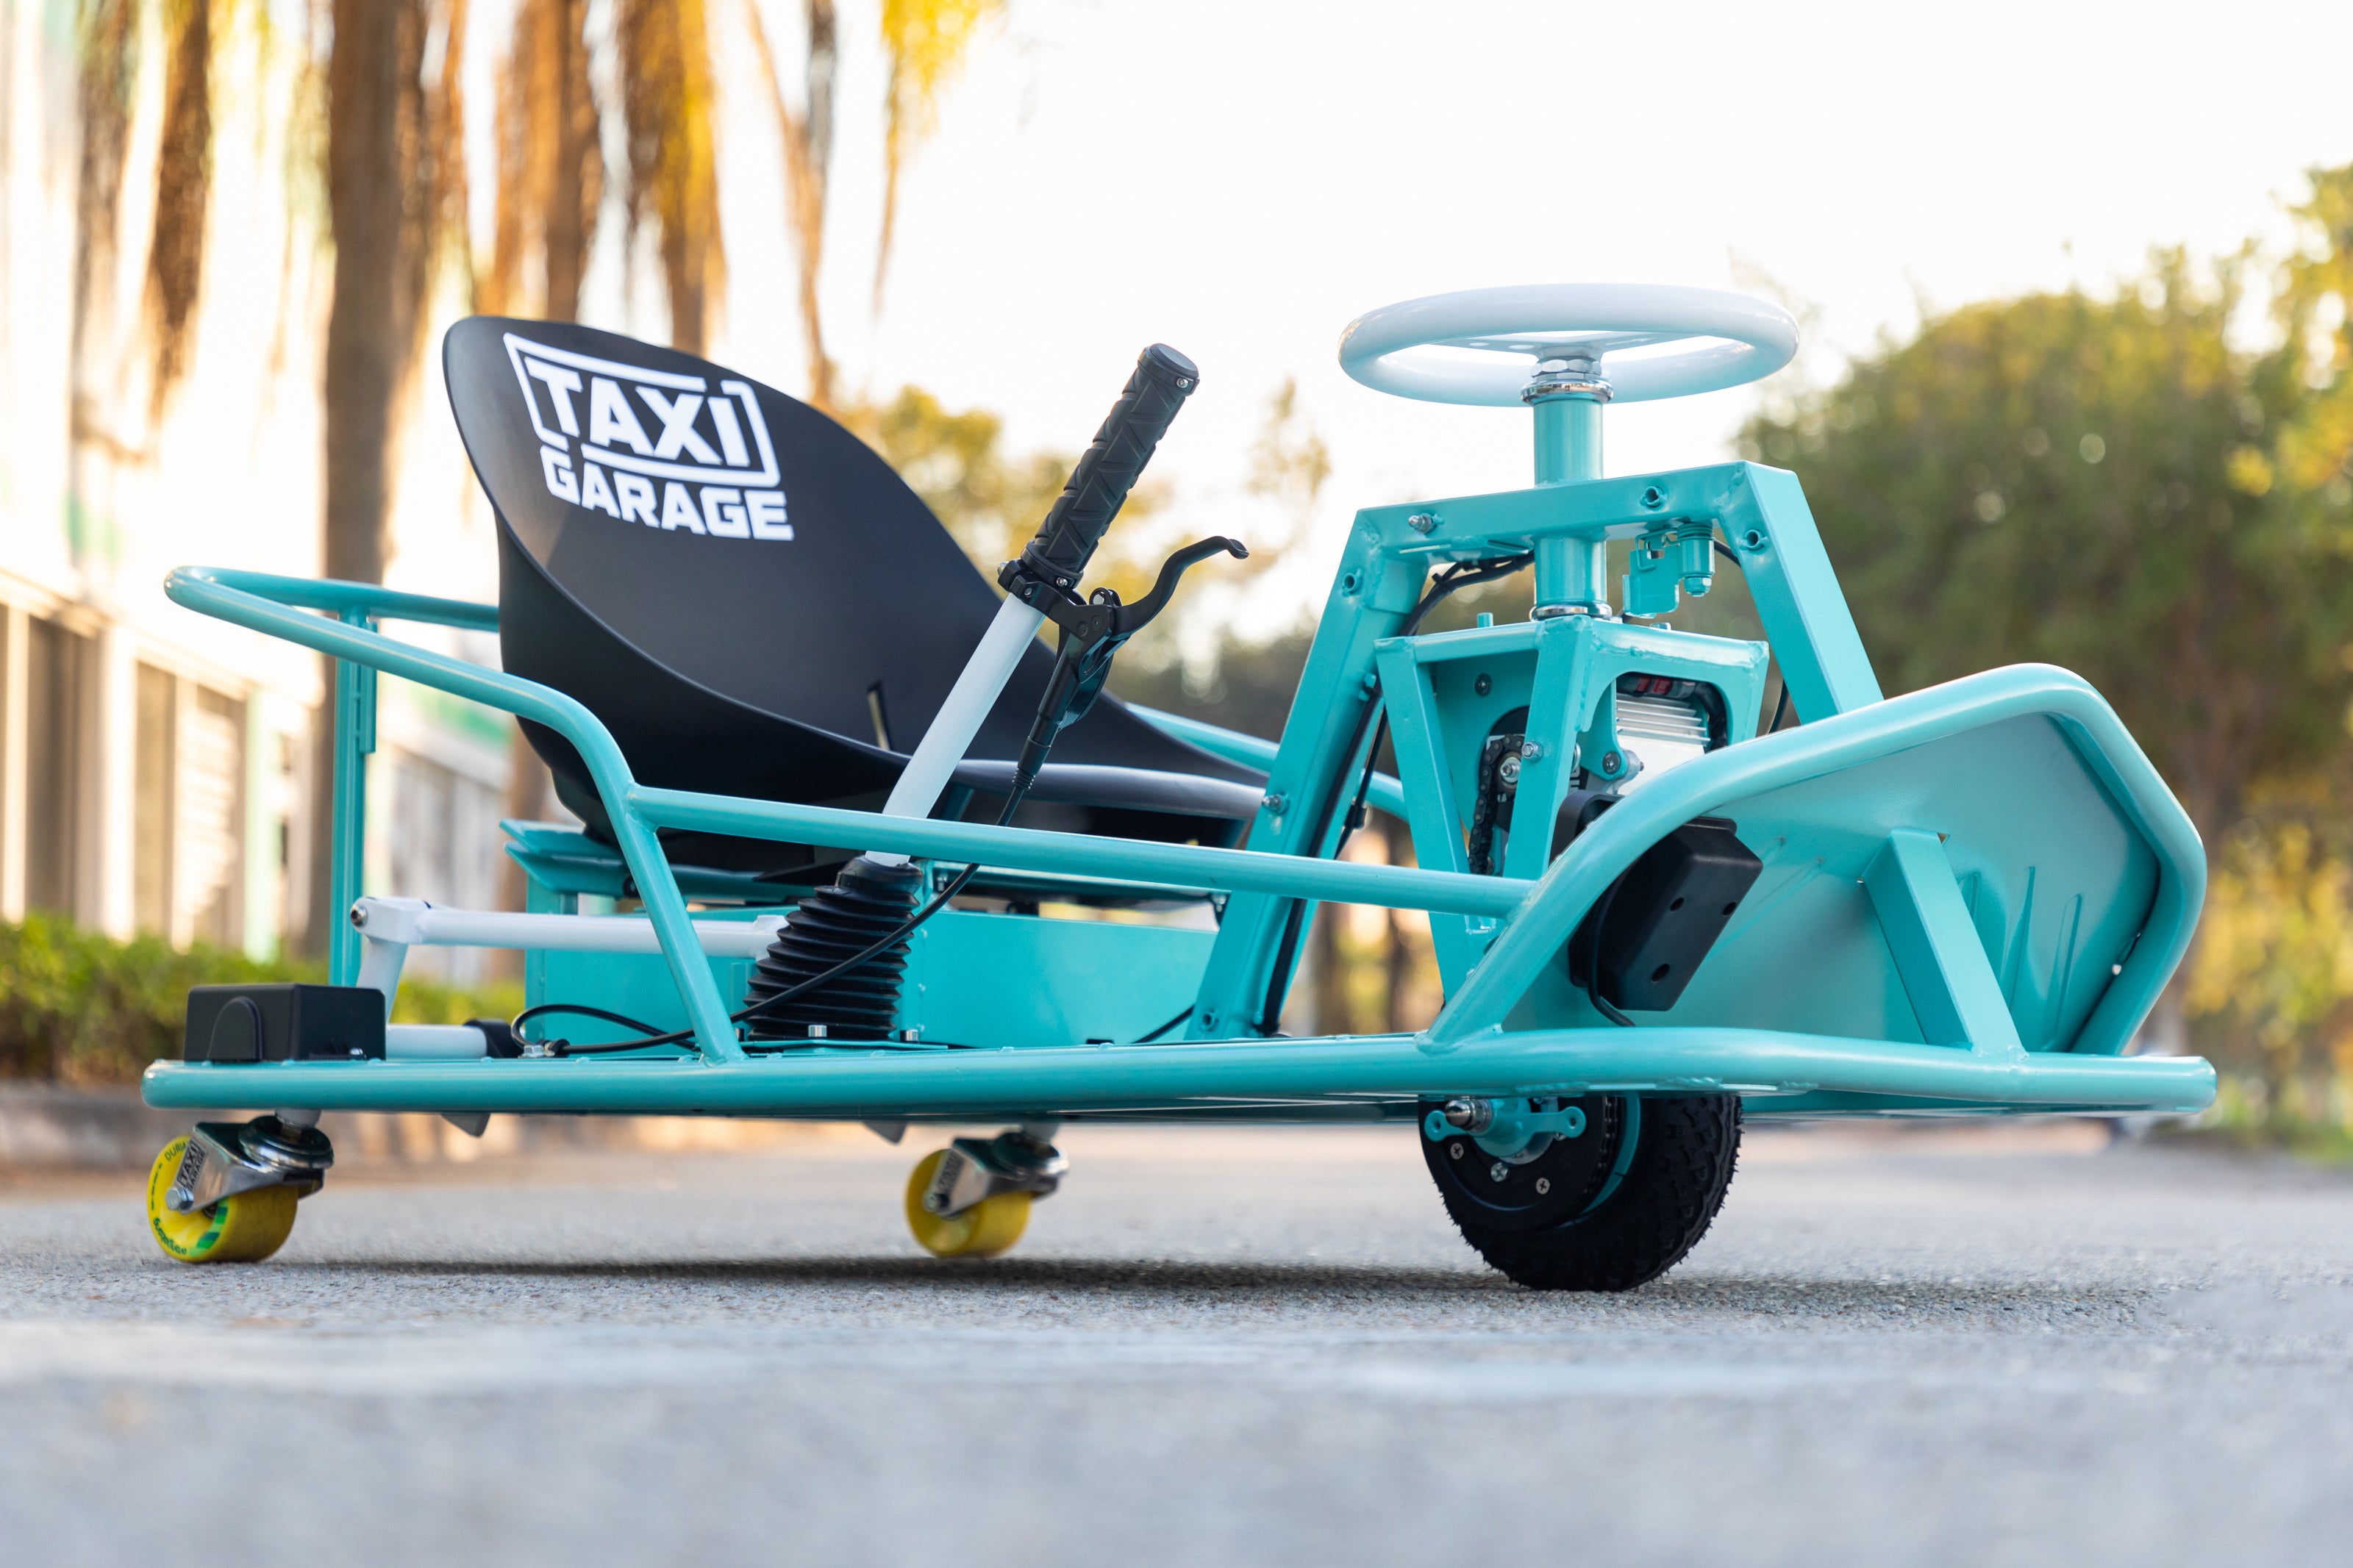 TAXI GARAGE Crazy Cart (STAGE 1), Crazy Carts